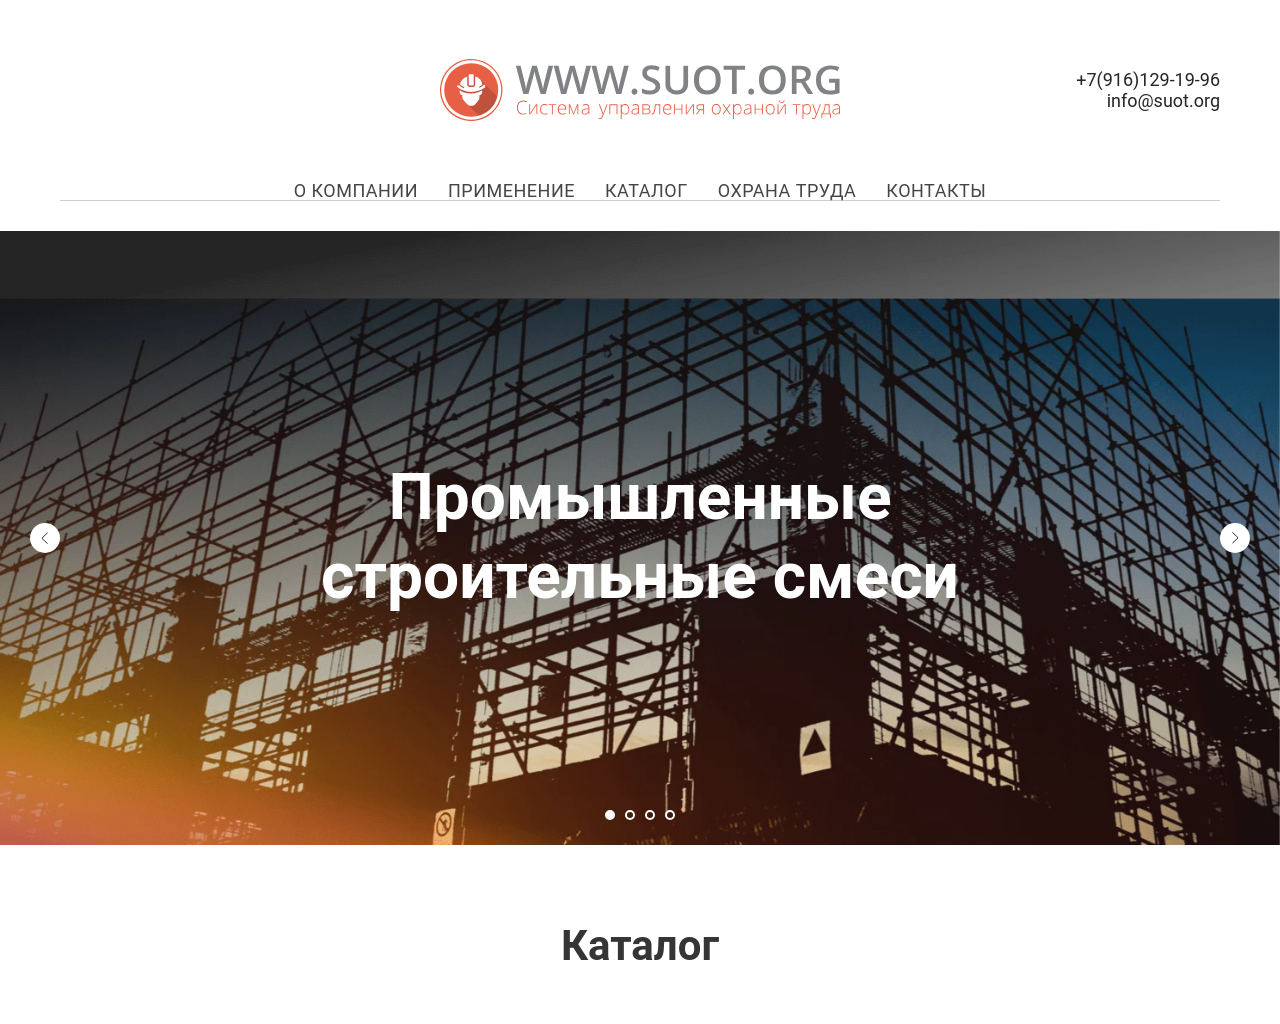 suot.org